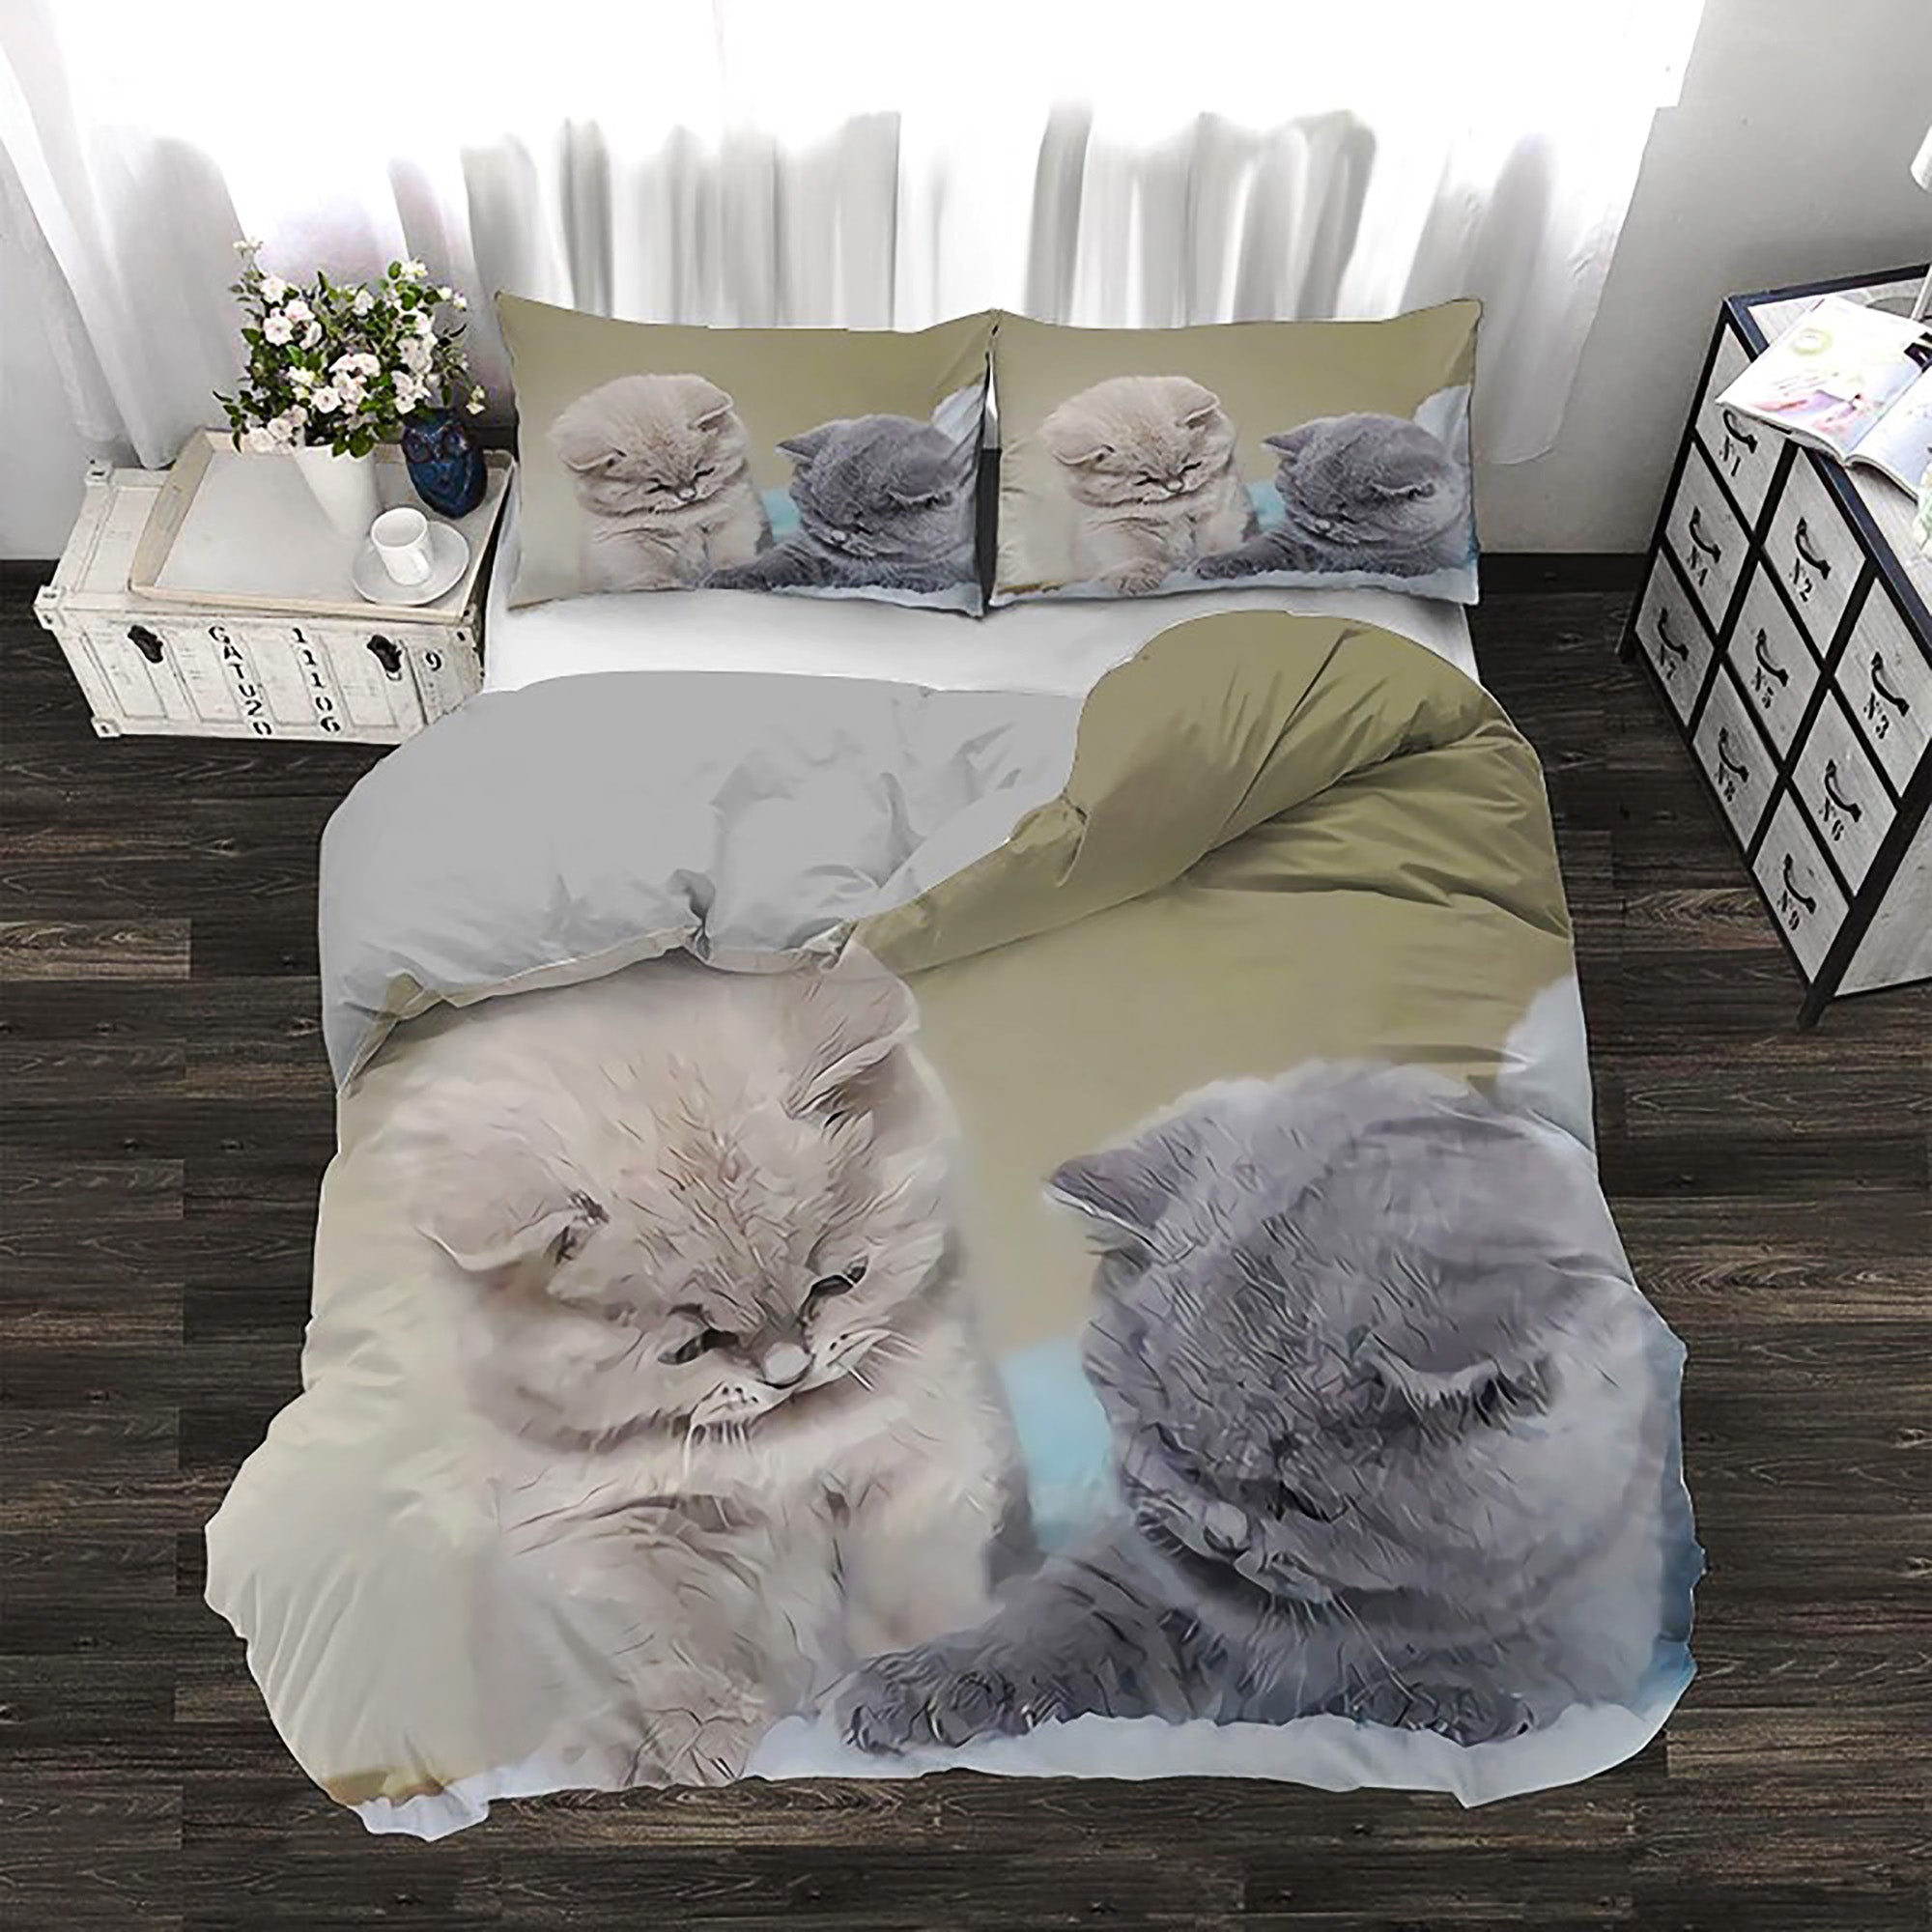 Cute Bedding Sets